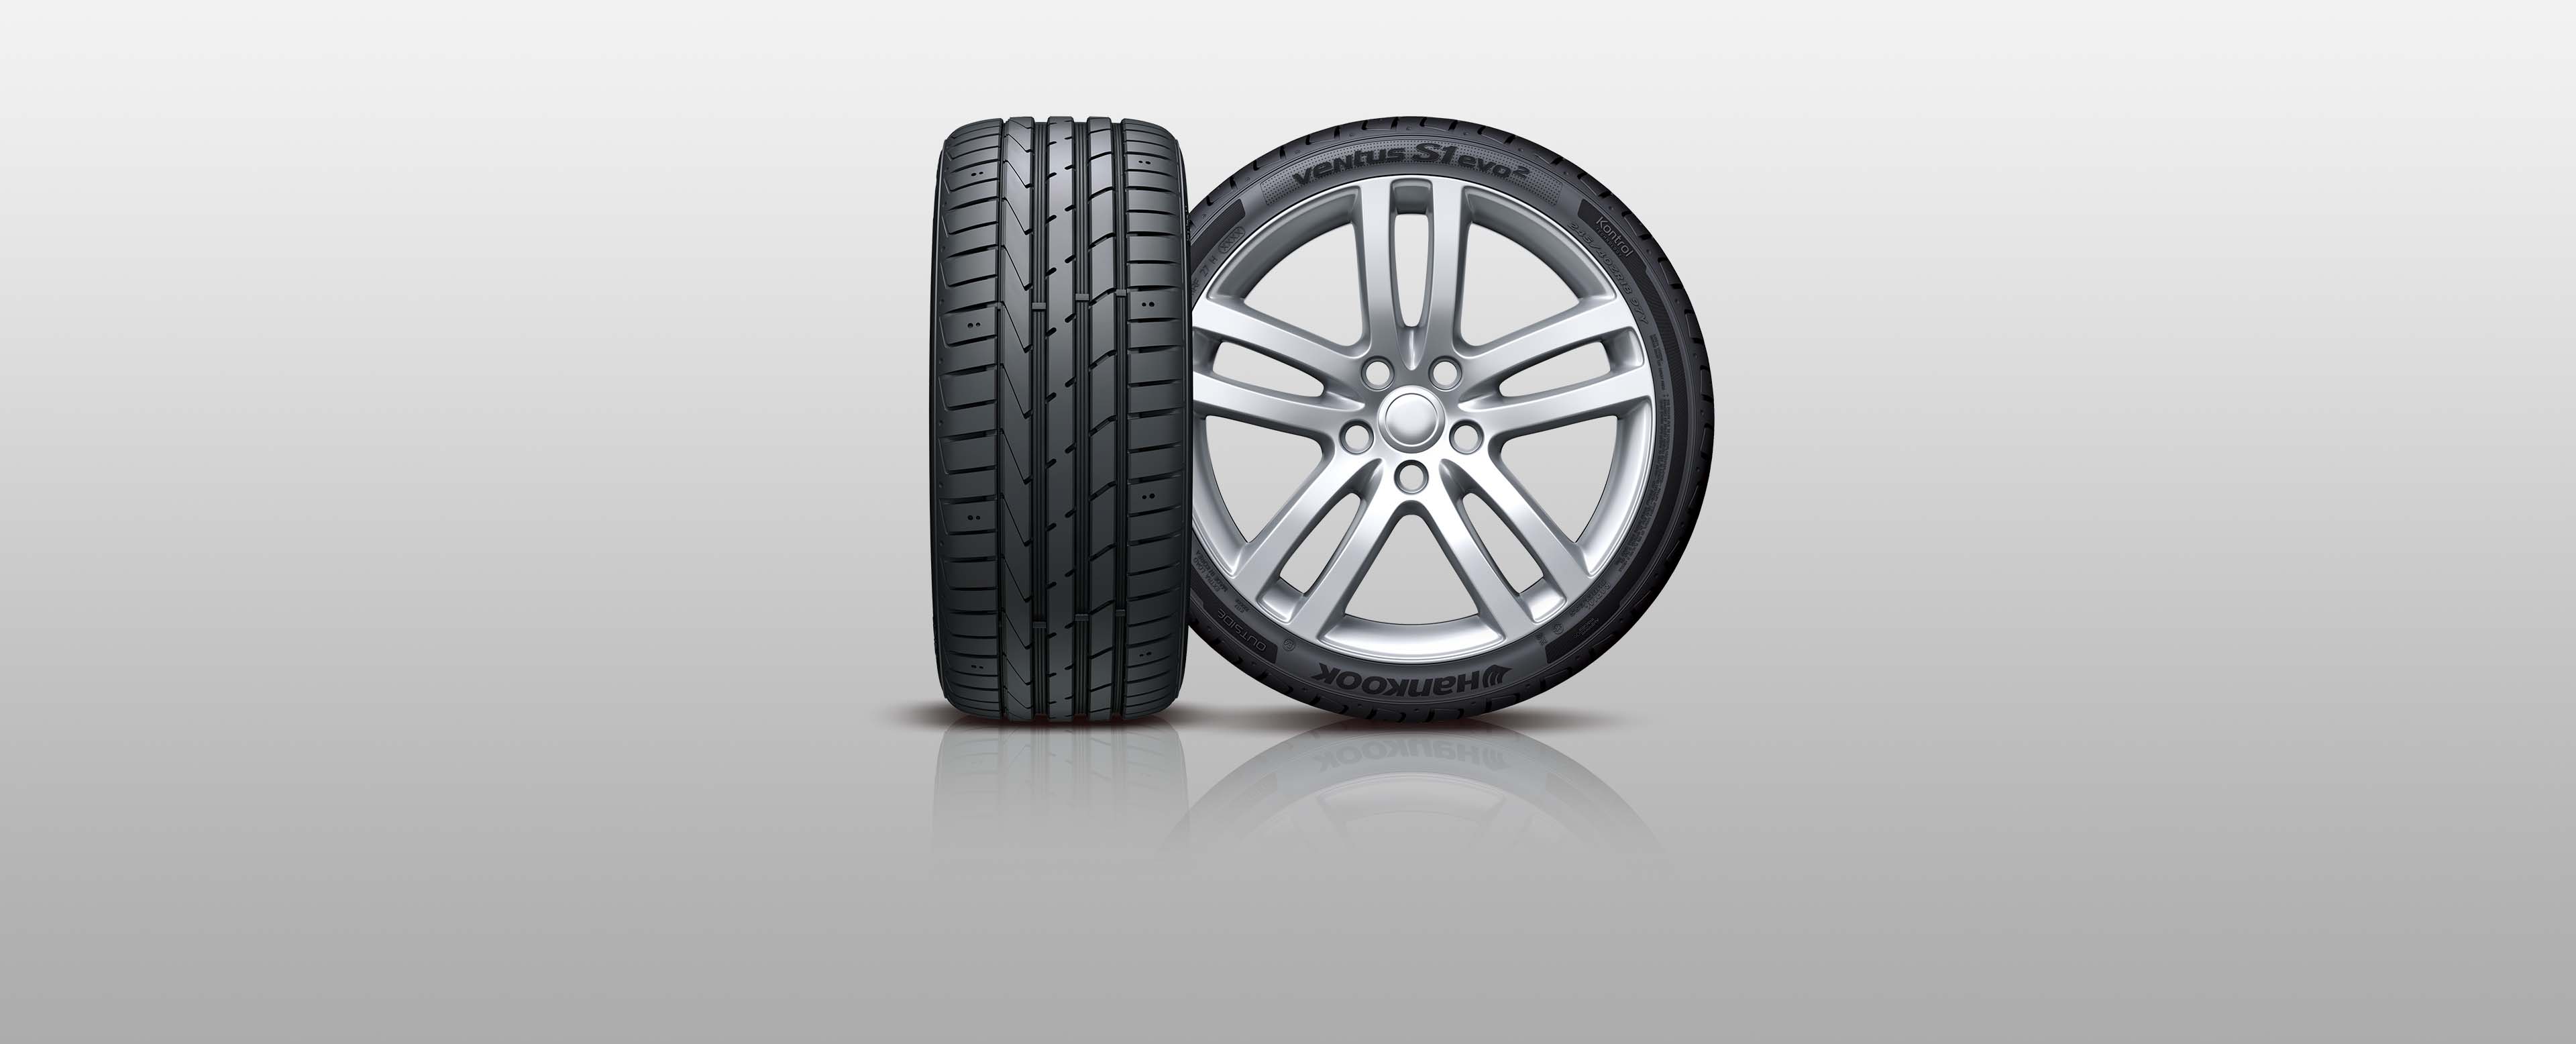 Hankook Tire & Technology-Tires-Ventus-Ventus S1 evo2-K117-The best balance between wet & dry performance